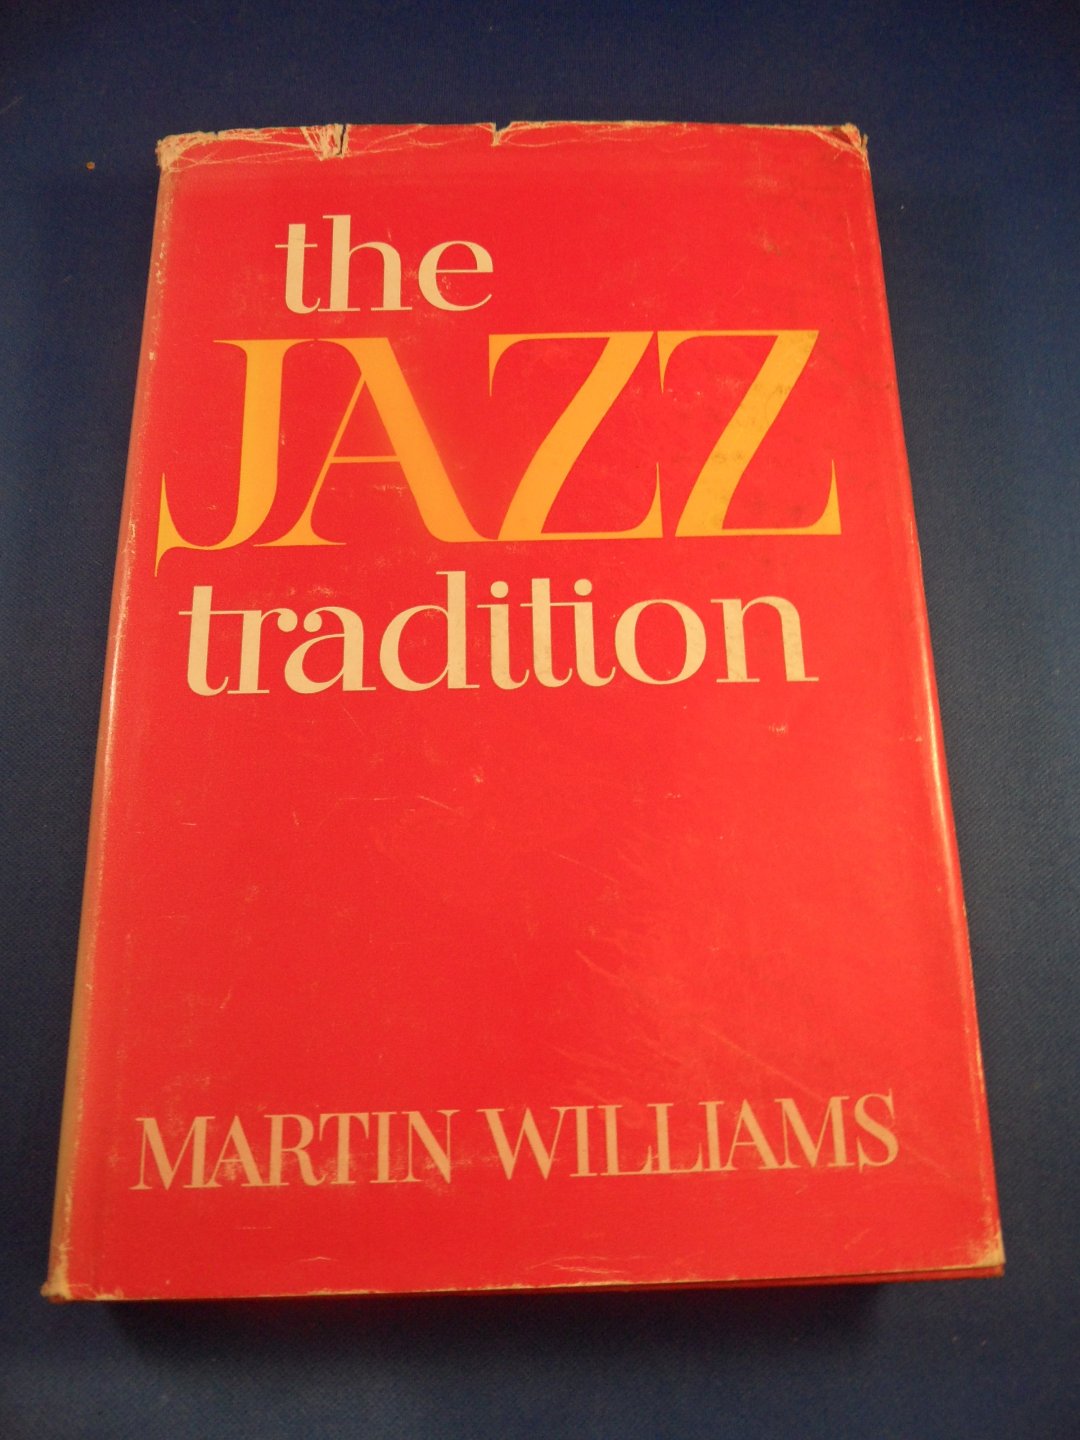 Williams, Martin - the jazz tradition